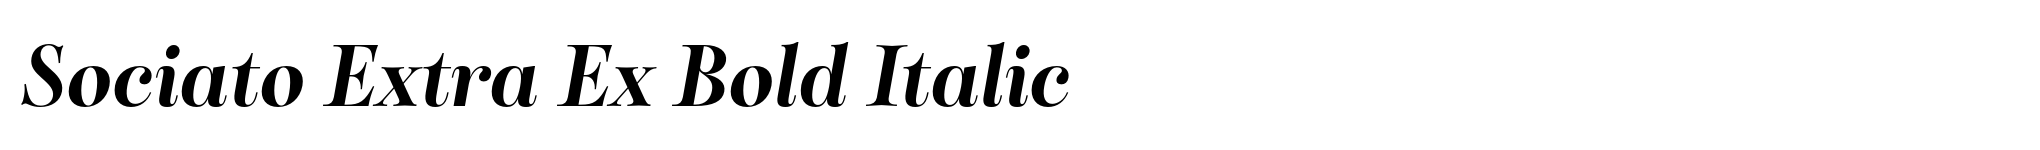 Sociato Extra Ex Bold Italic image